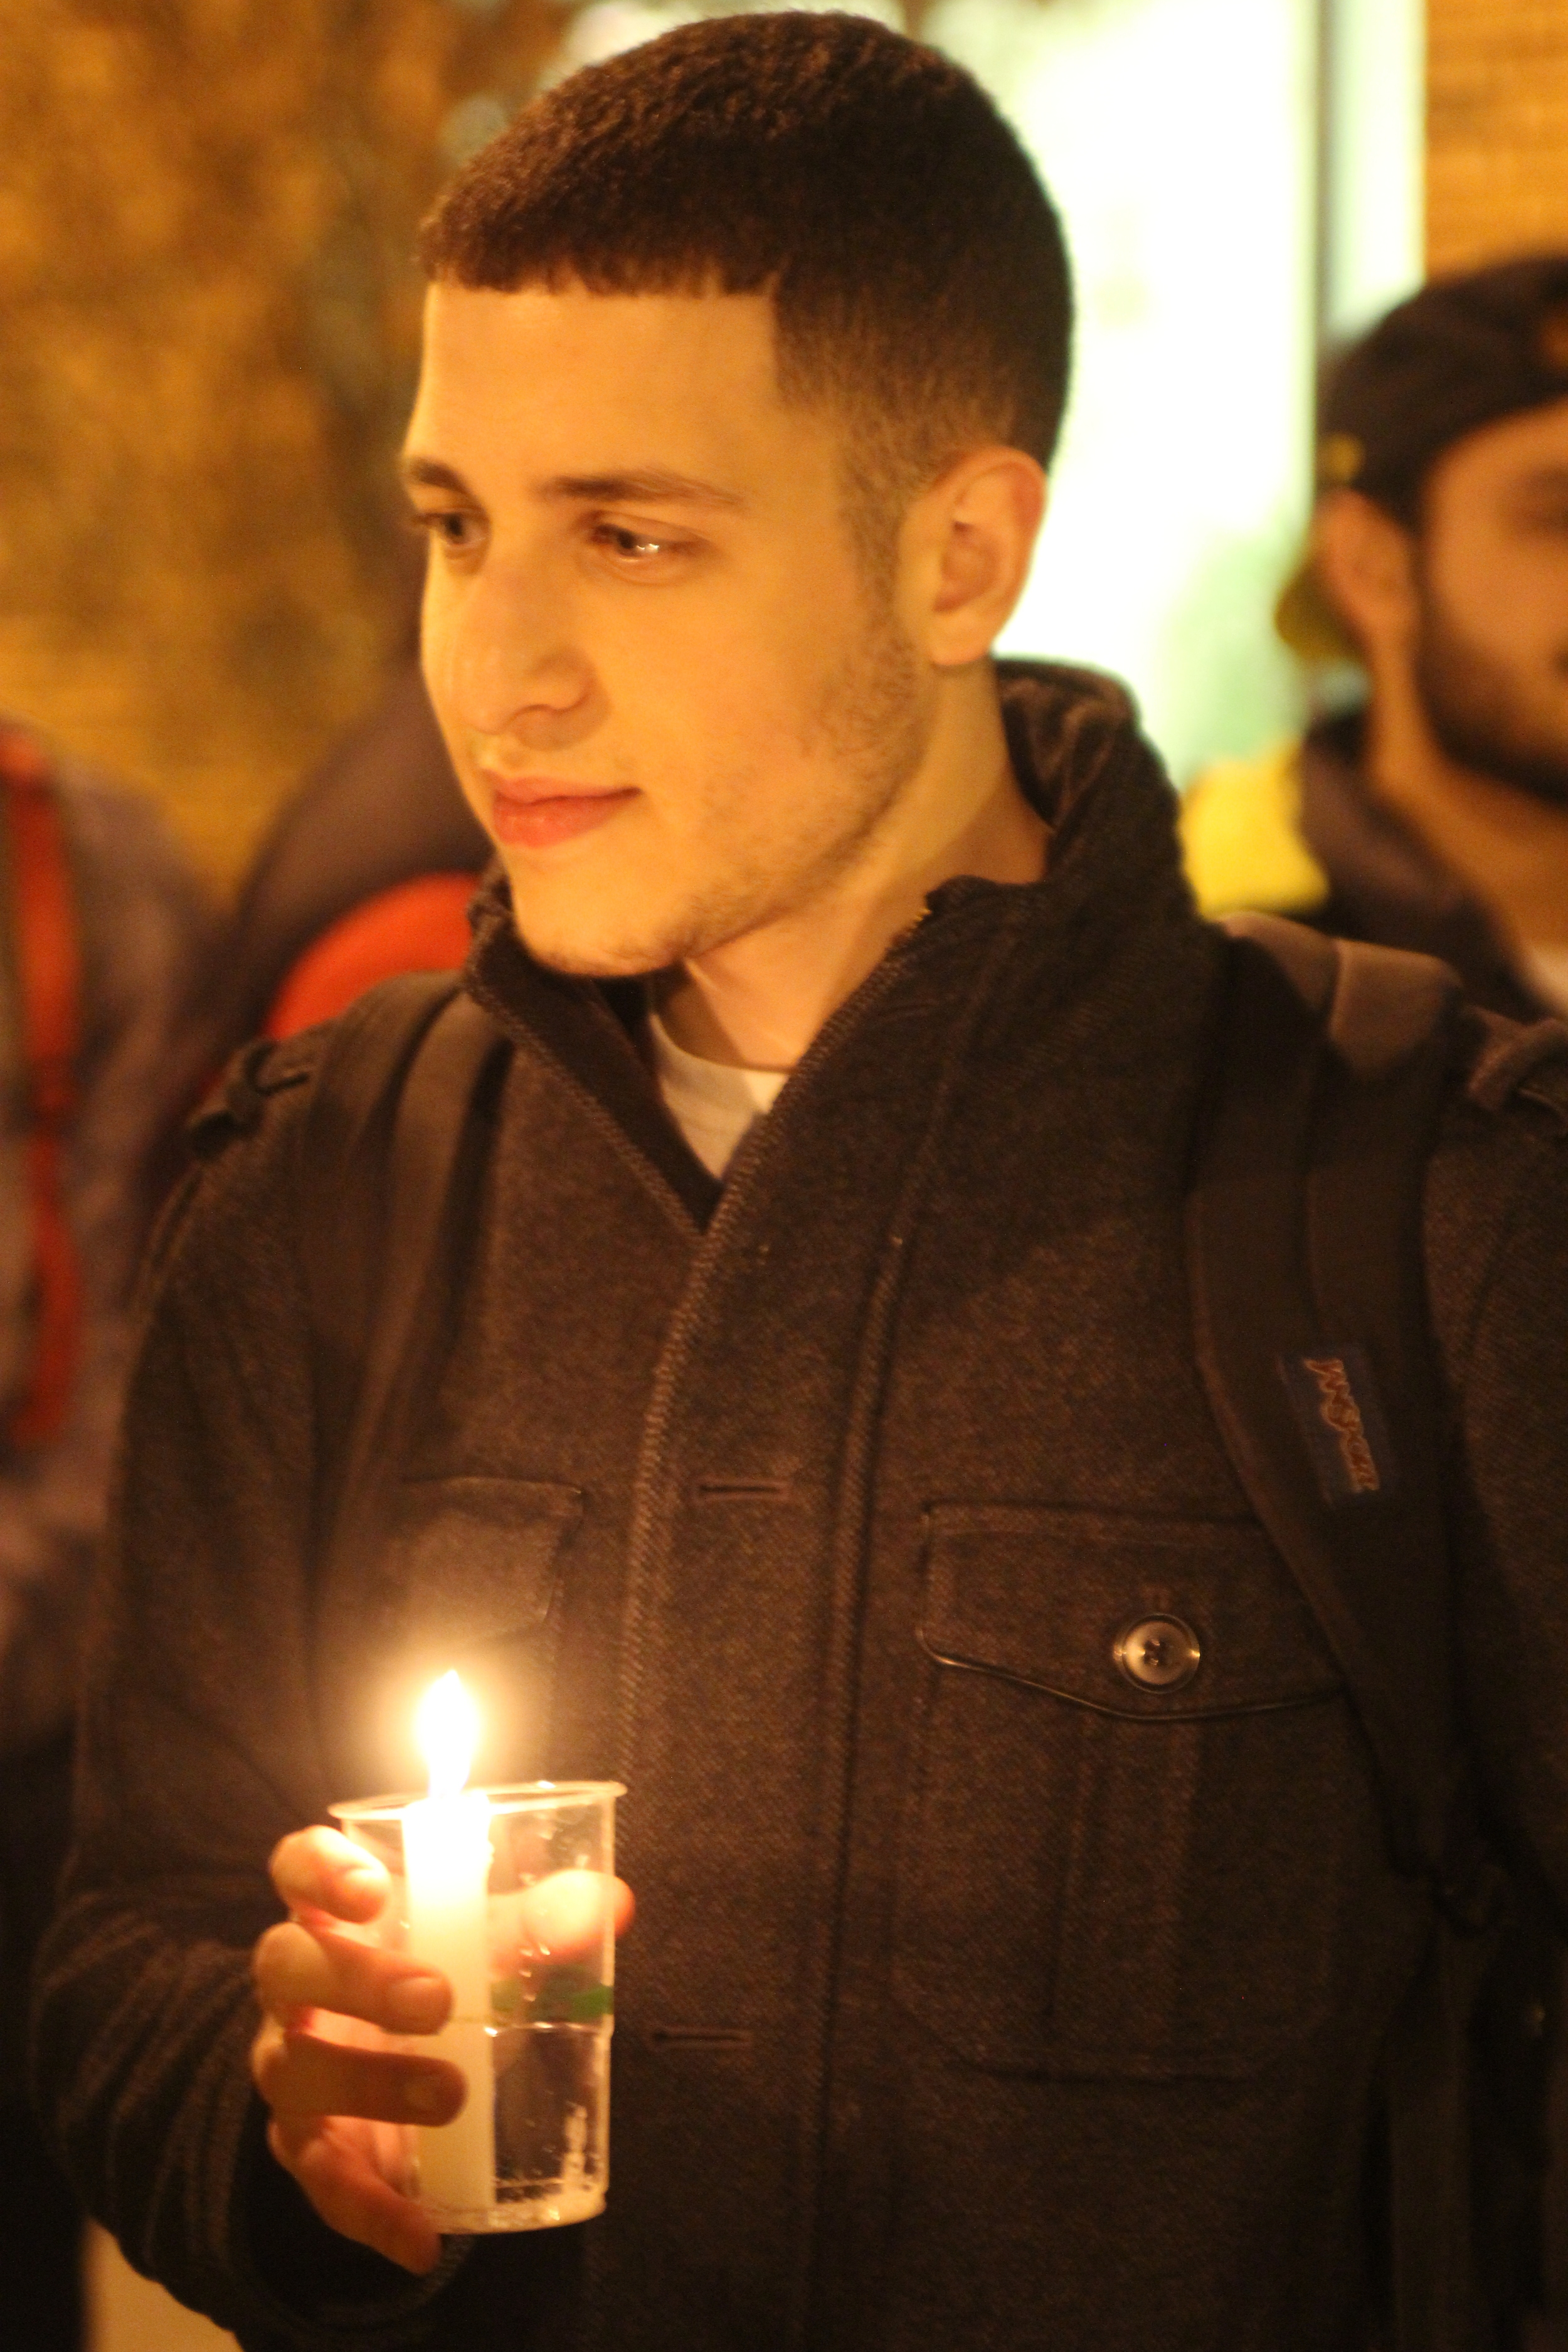   Sami Mubarak, dental student at The Ohio State University, attends a candlelight vigil held for the three Muslim Americans, Deah Barakat, Yusor Abu-Salha and Razan Abu-Salha,&nbsp;murdered in Chapel Hill, North Carolina. February, 2015.  